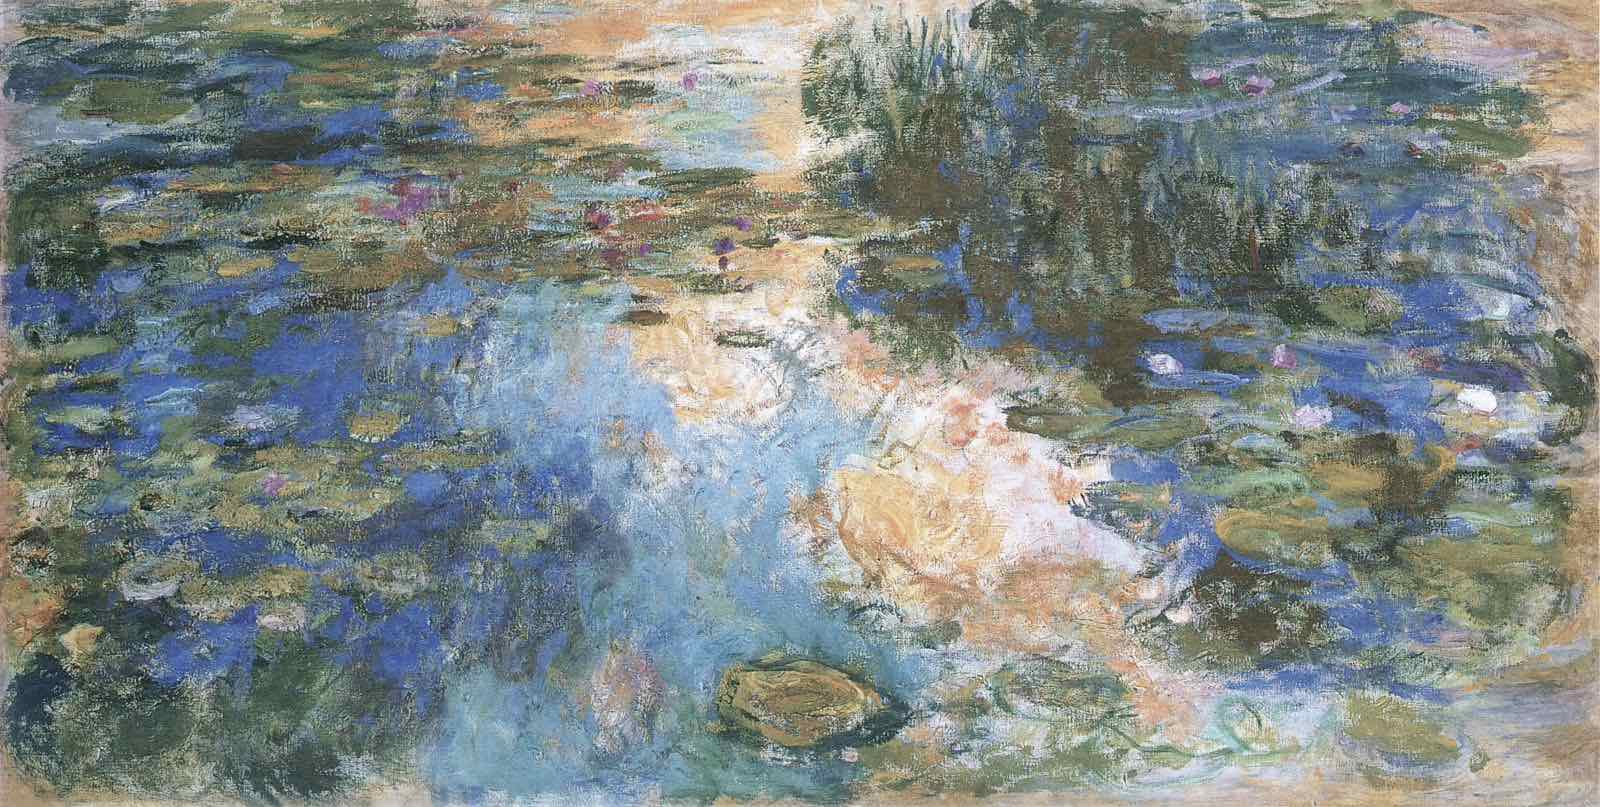 Nymphéas- Claude Monet (1840-1926)